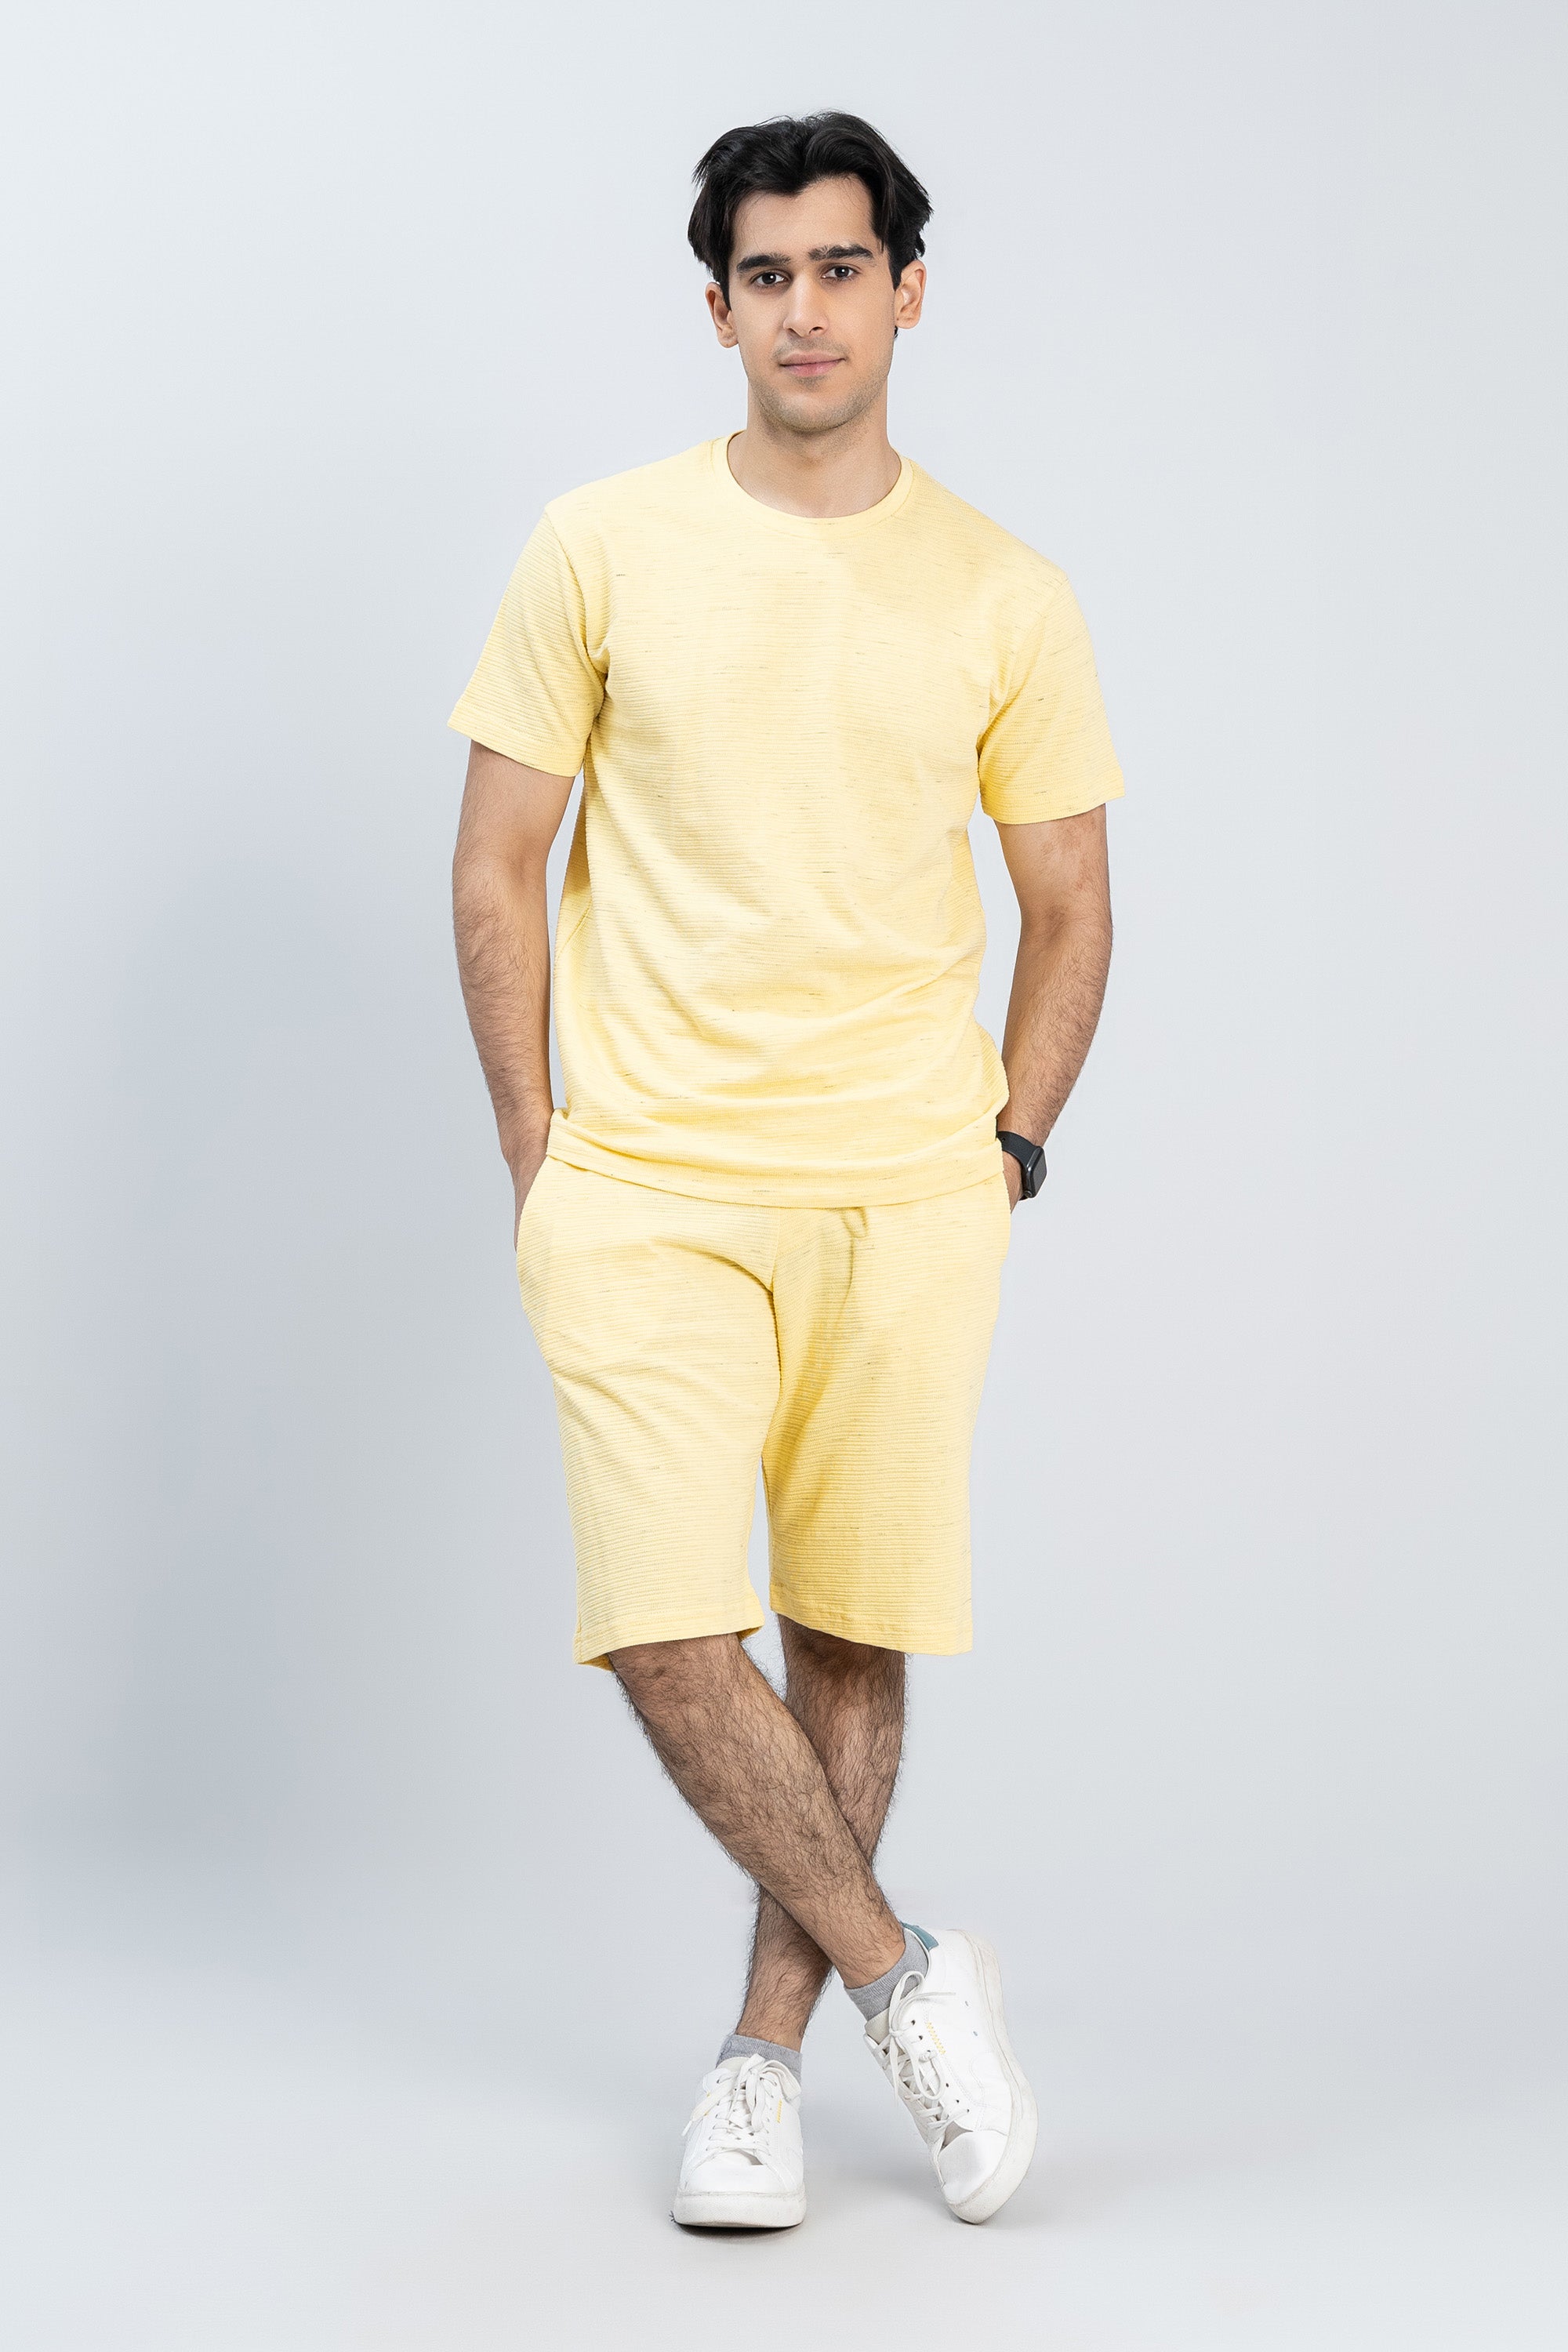 Yellow Half Sleeves Shirt